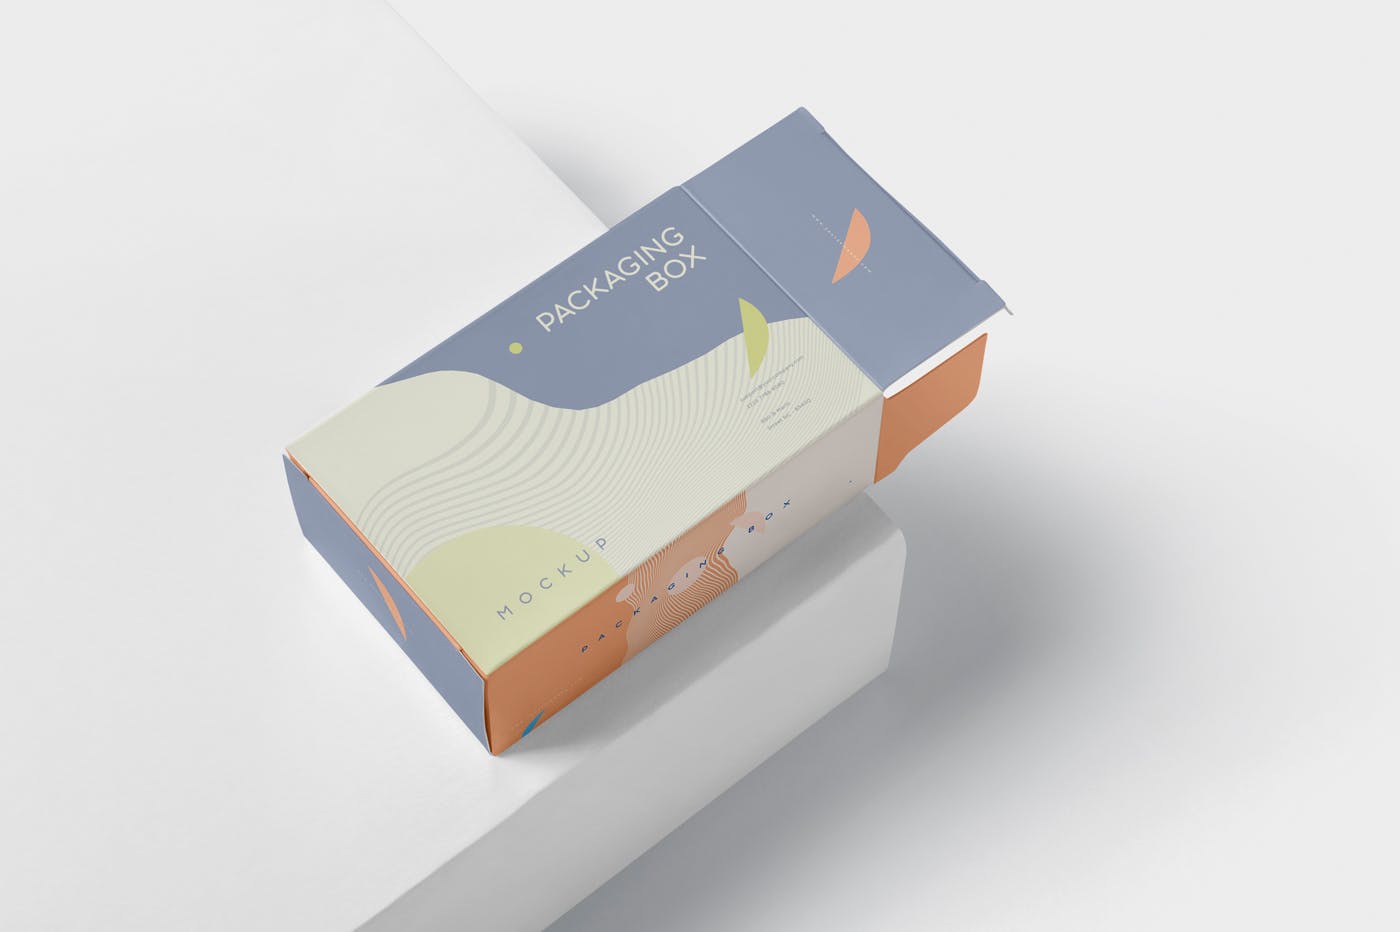 扁平矩形产品包装盒效果图素材库精选 Package Box Mockup – Slim Rectangle Shape插图(3)